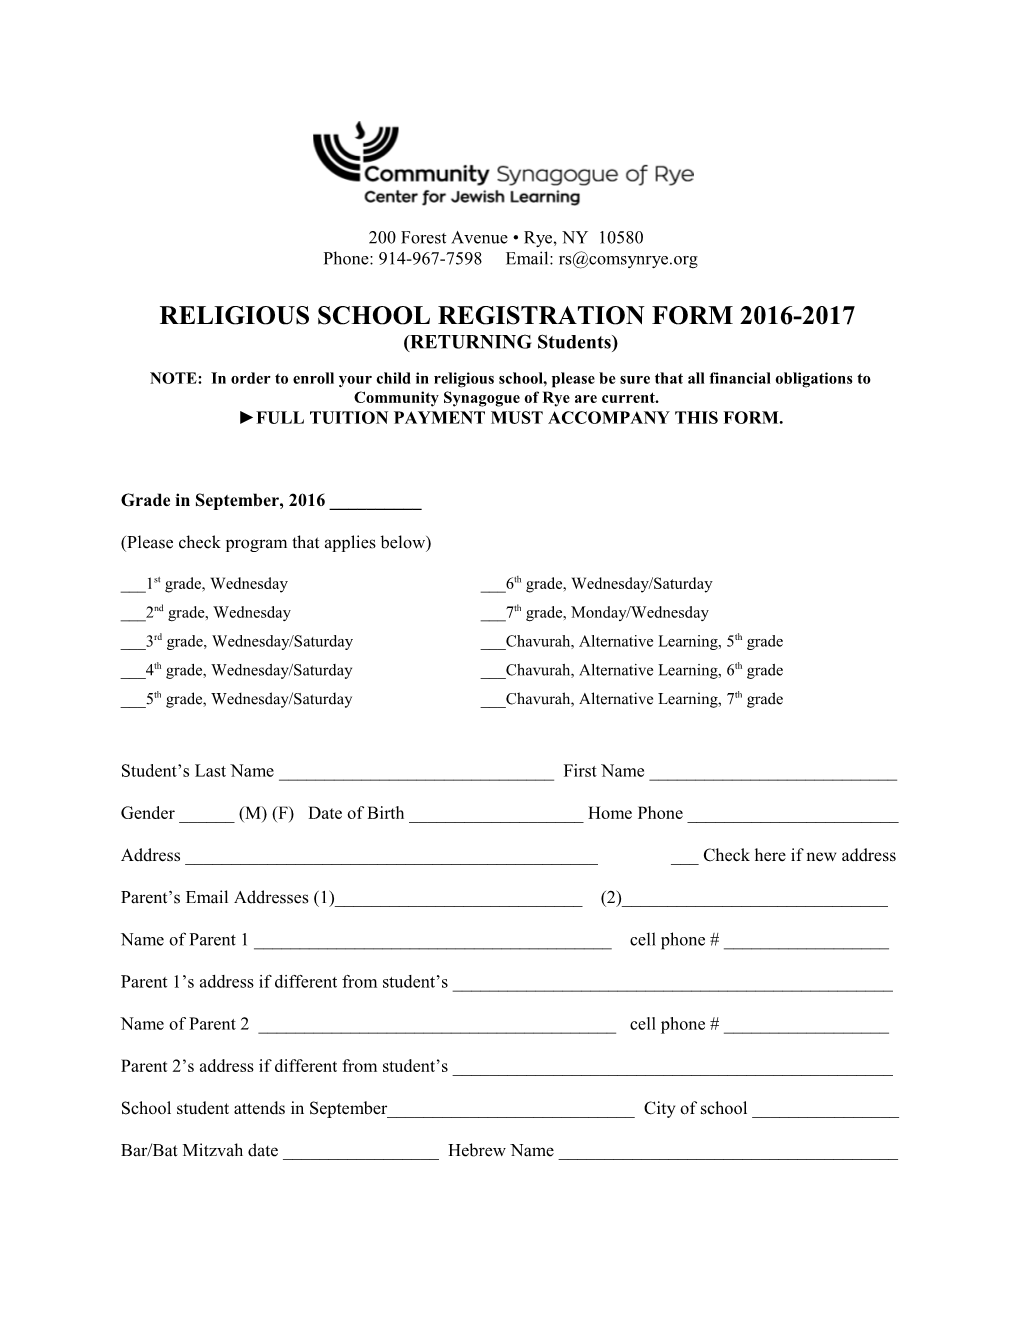 Religious School Registration Form 2016-2017